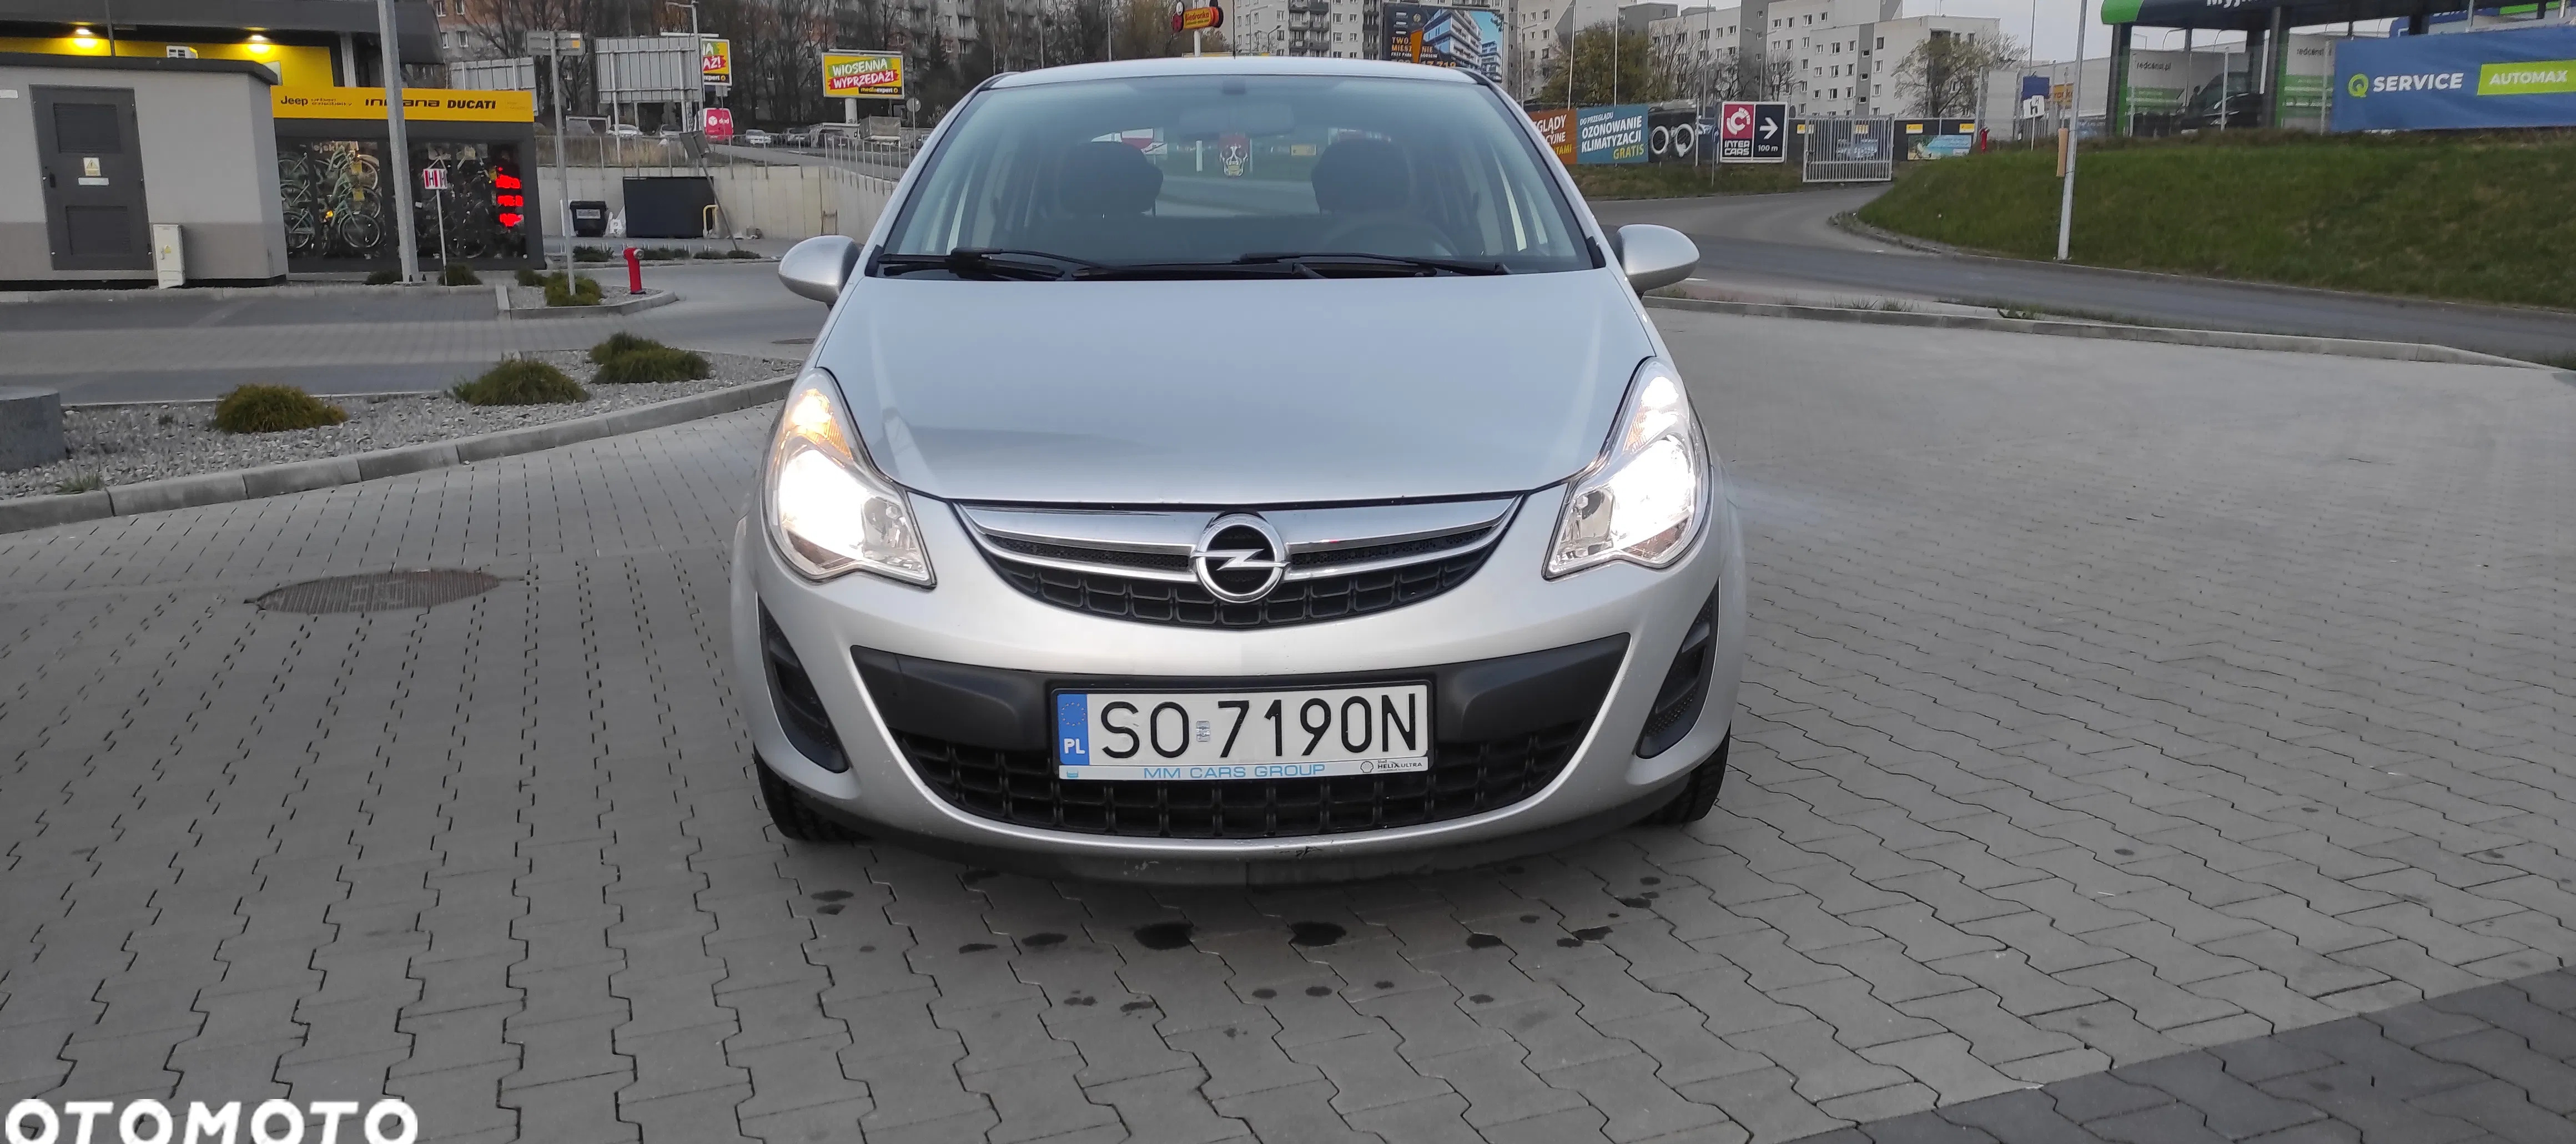 opel corsa Opel Corsa cena 18770 przebieg: 169215, rok produkcji 2011 z Sosnowiec